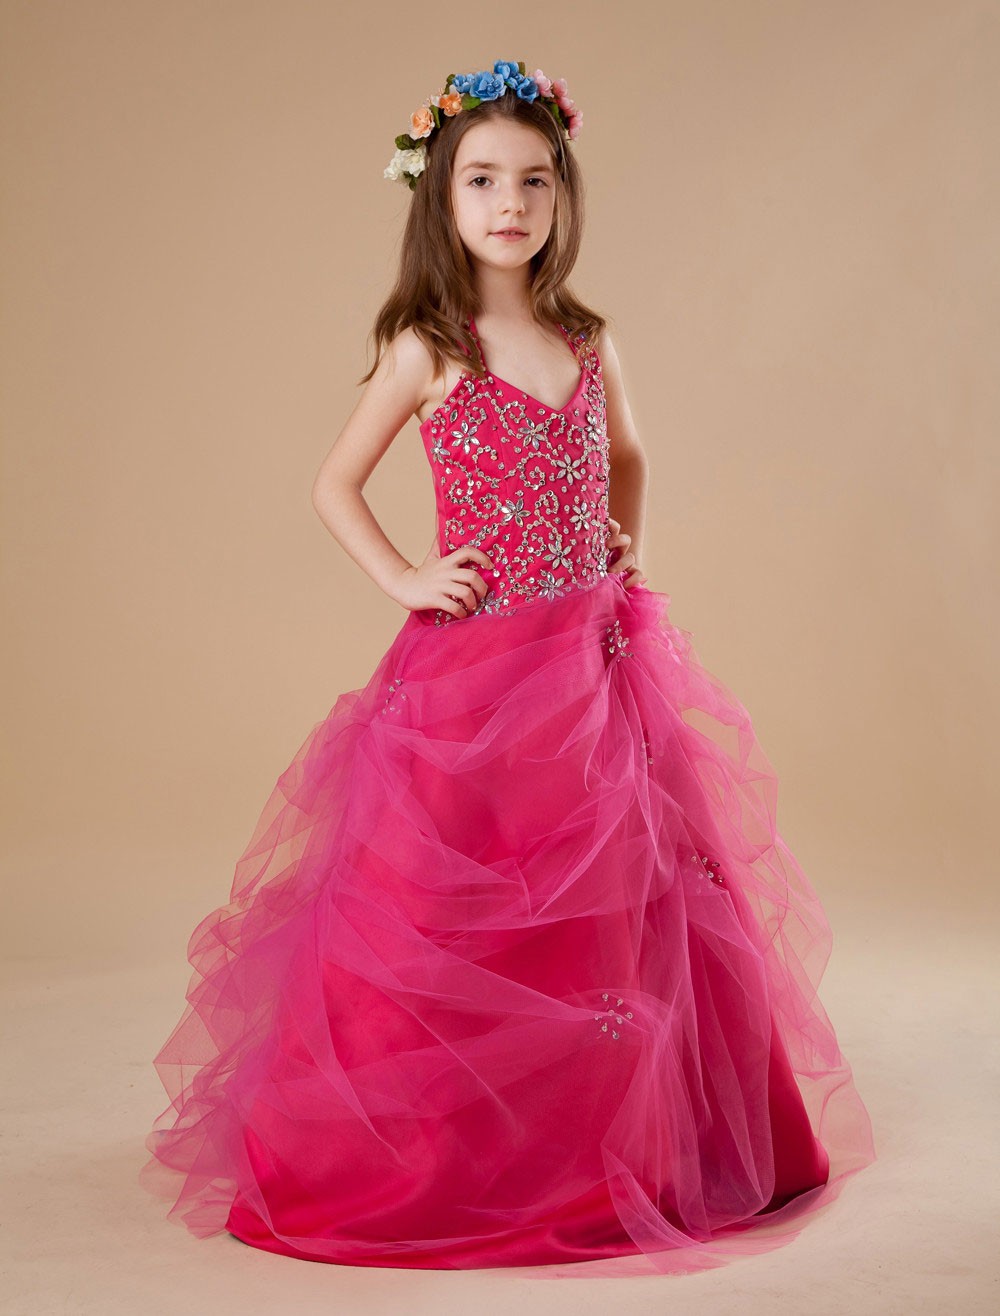 Petite Small Dresses & Make You Look Like A Princess